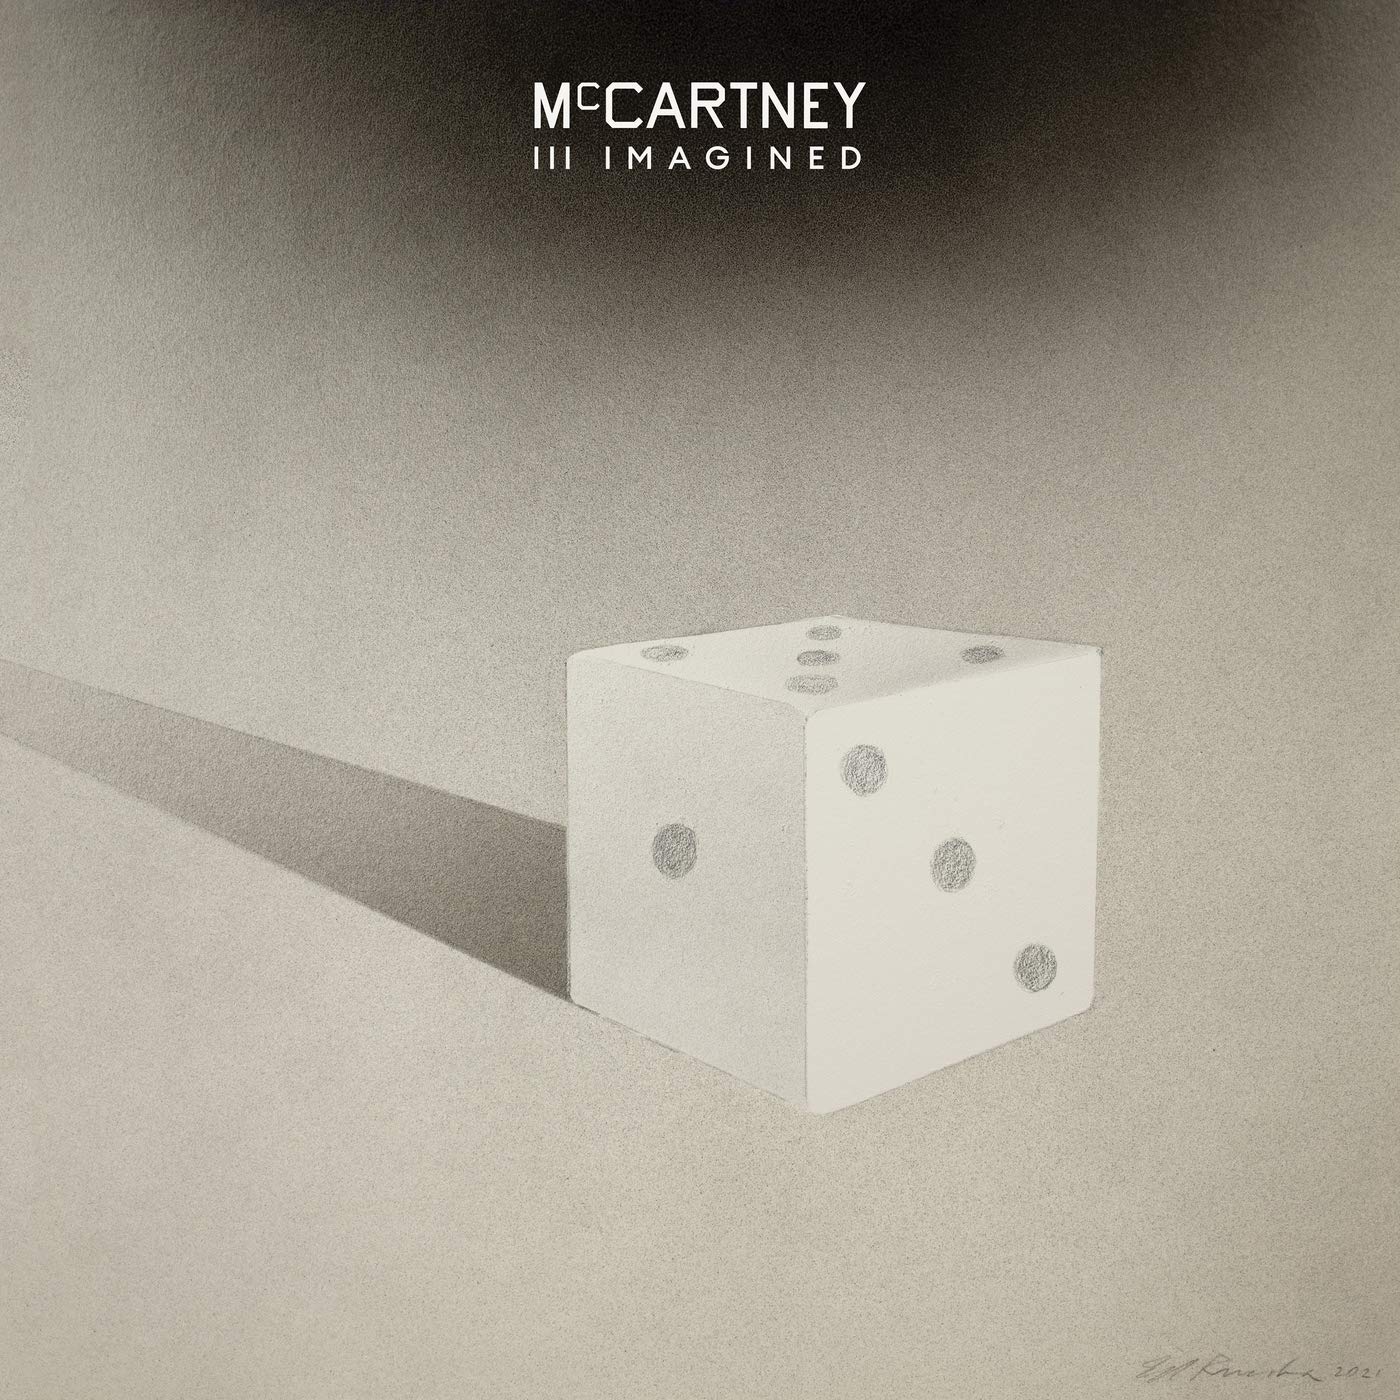 Paul Mc Cartney
 - Imagined III
